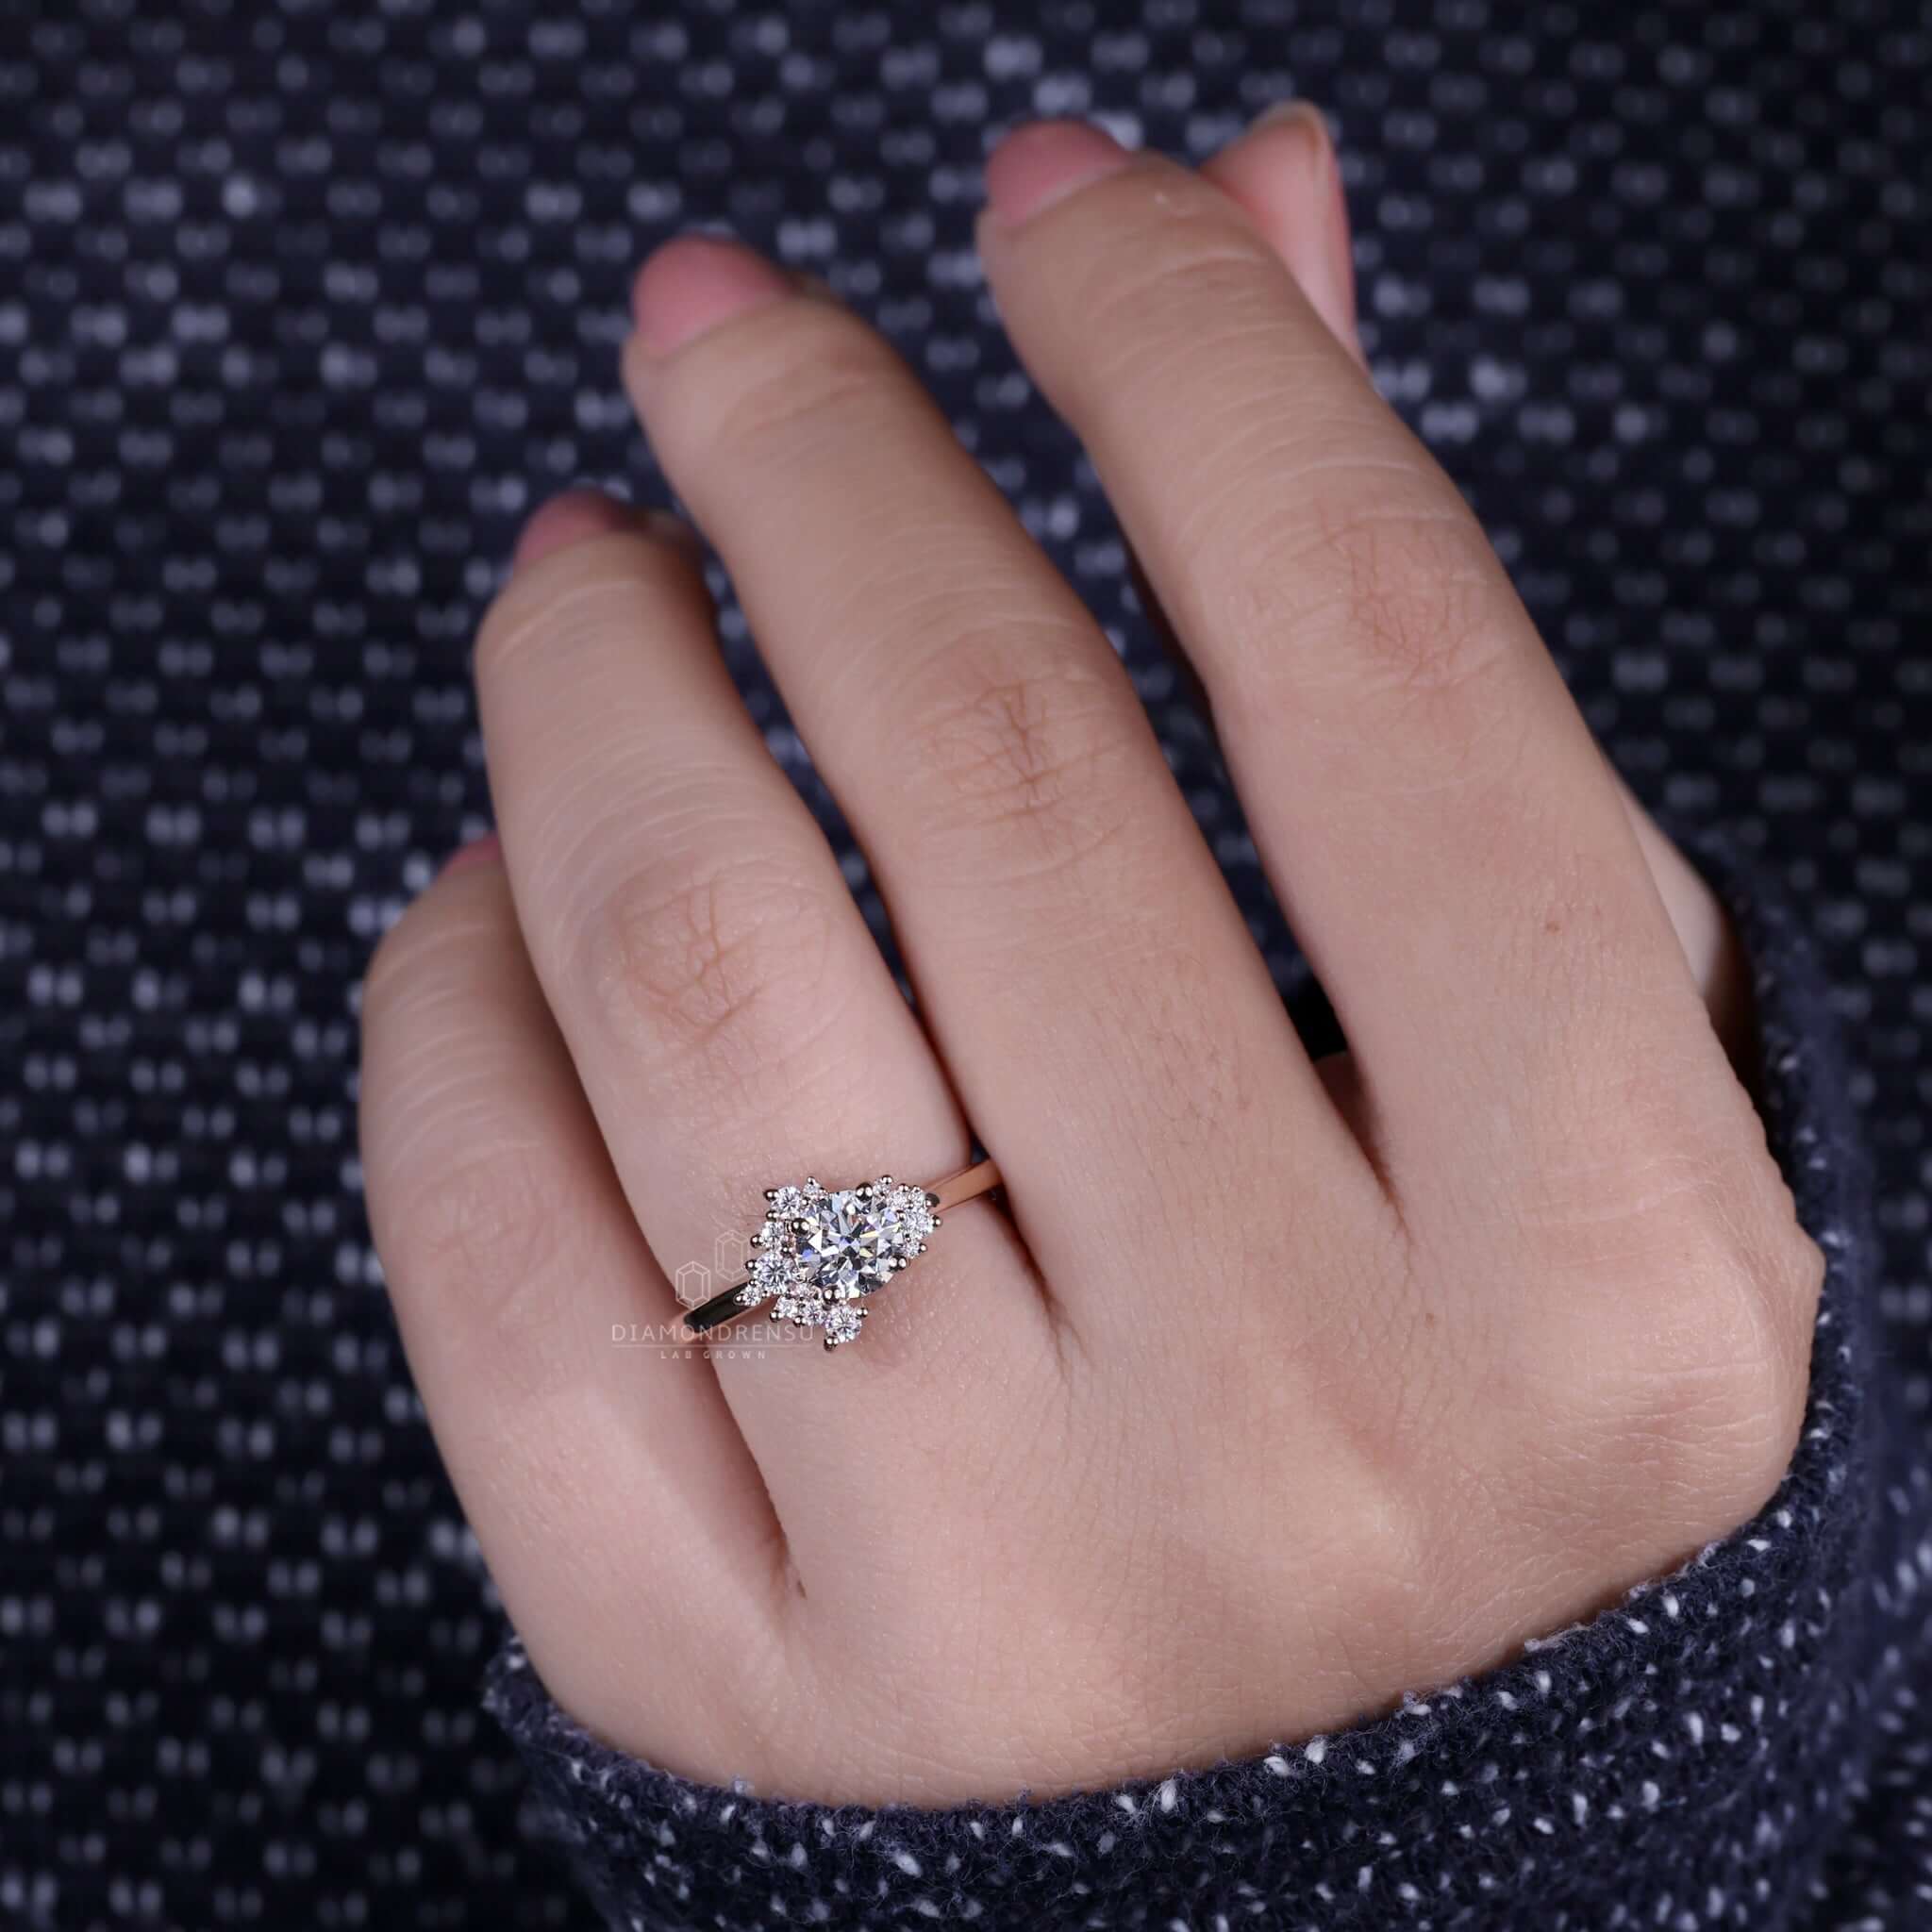 Stunning Moonstone Engagement Rings for Cool Girls